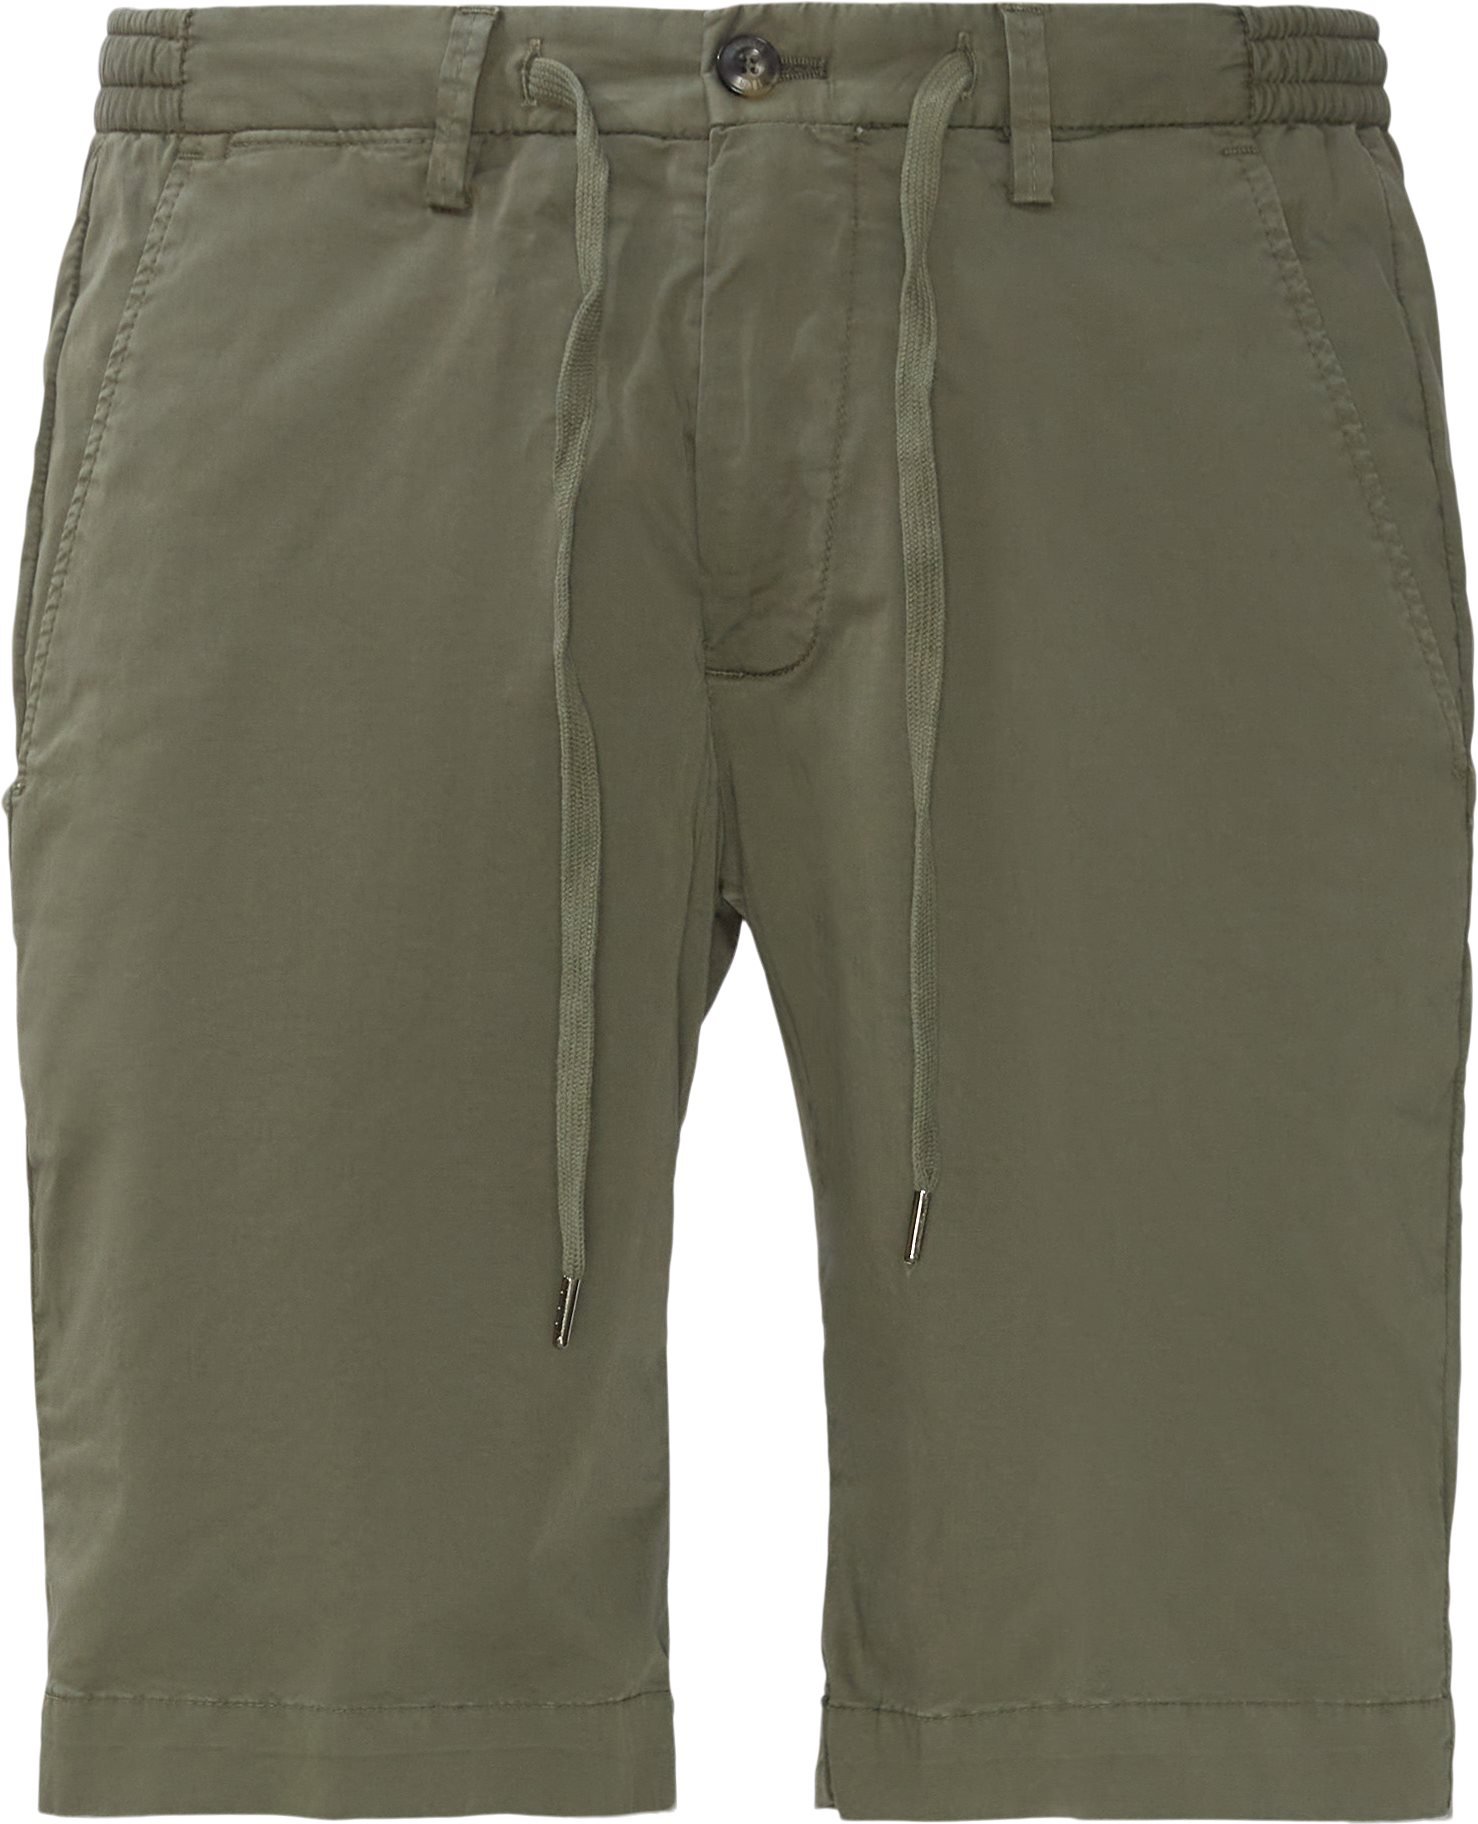 Malibu Shorts - Shorts - Regular fit - Army